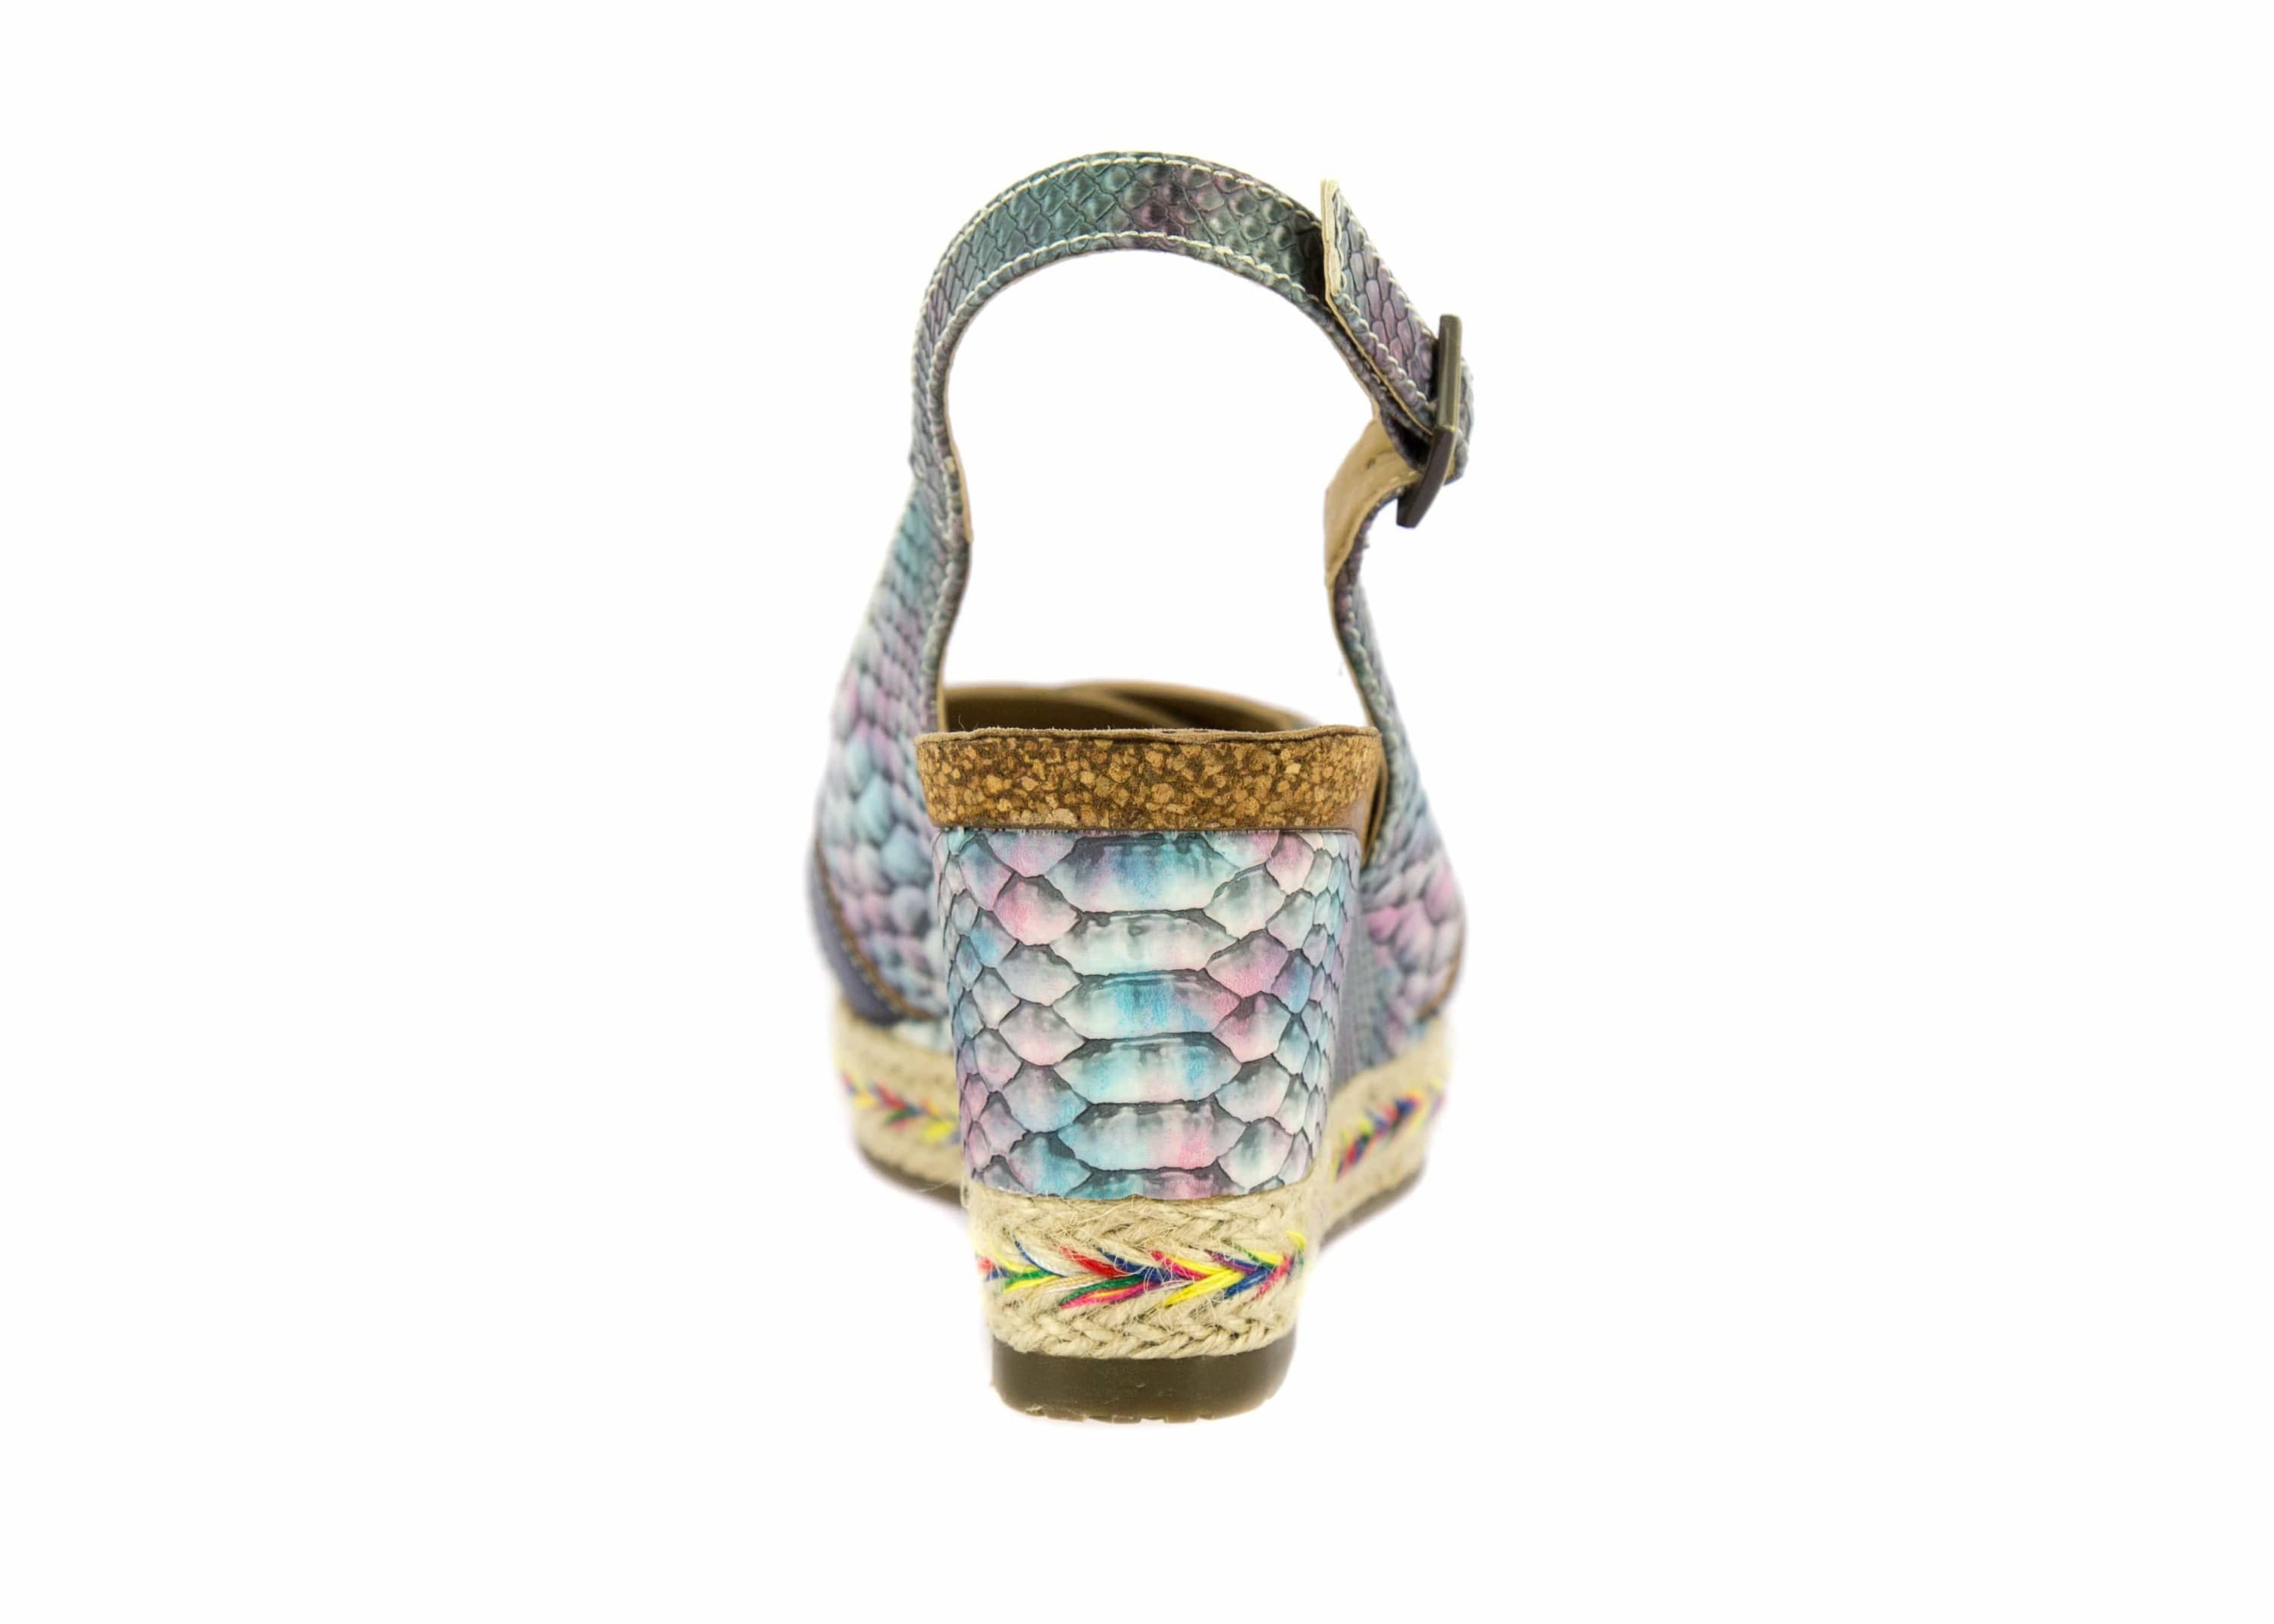 Schuh FACYO09 - Sandale